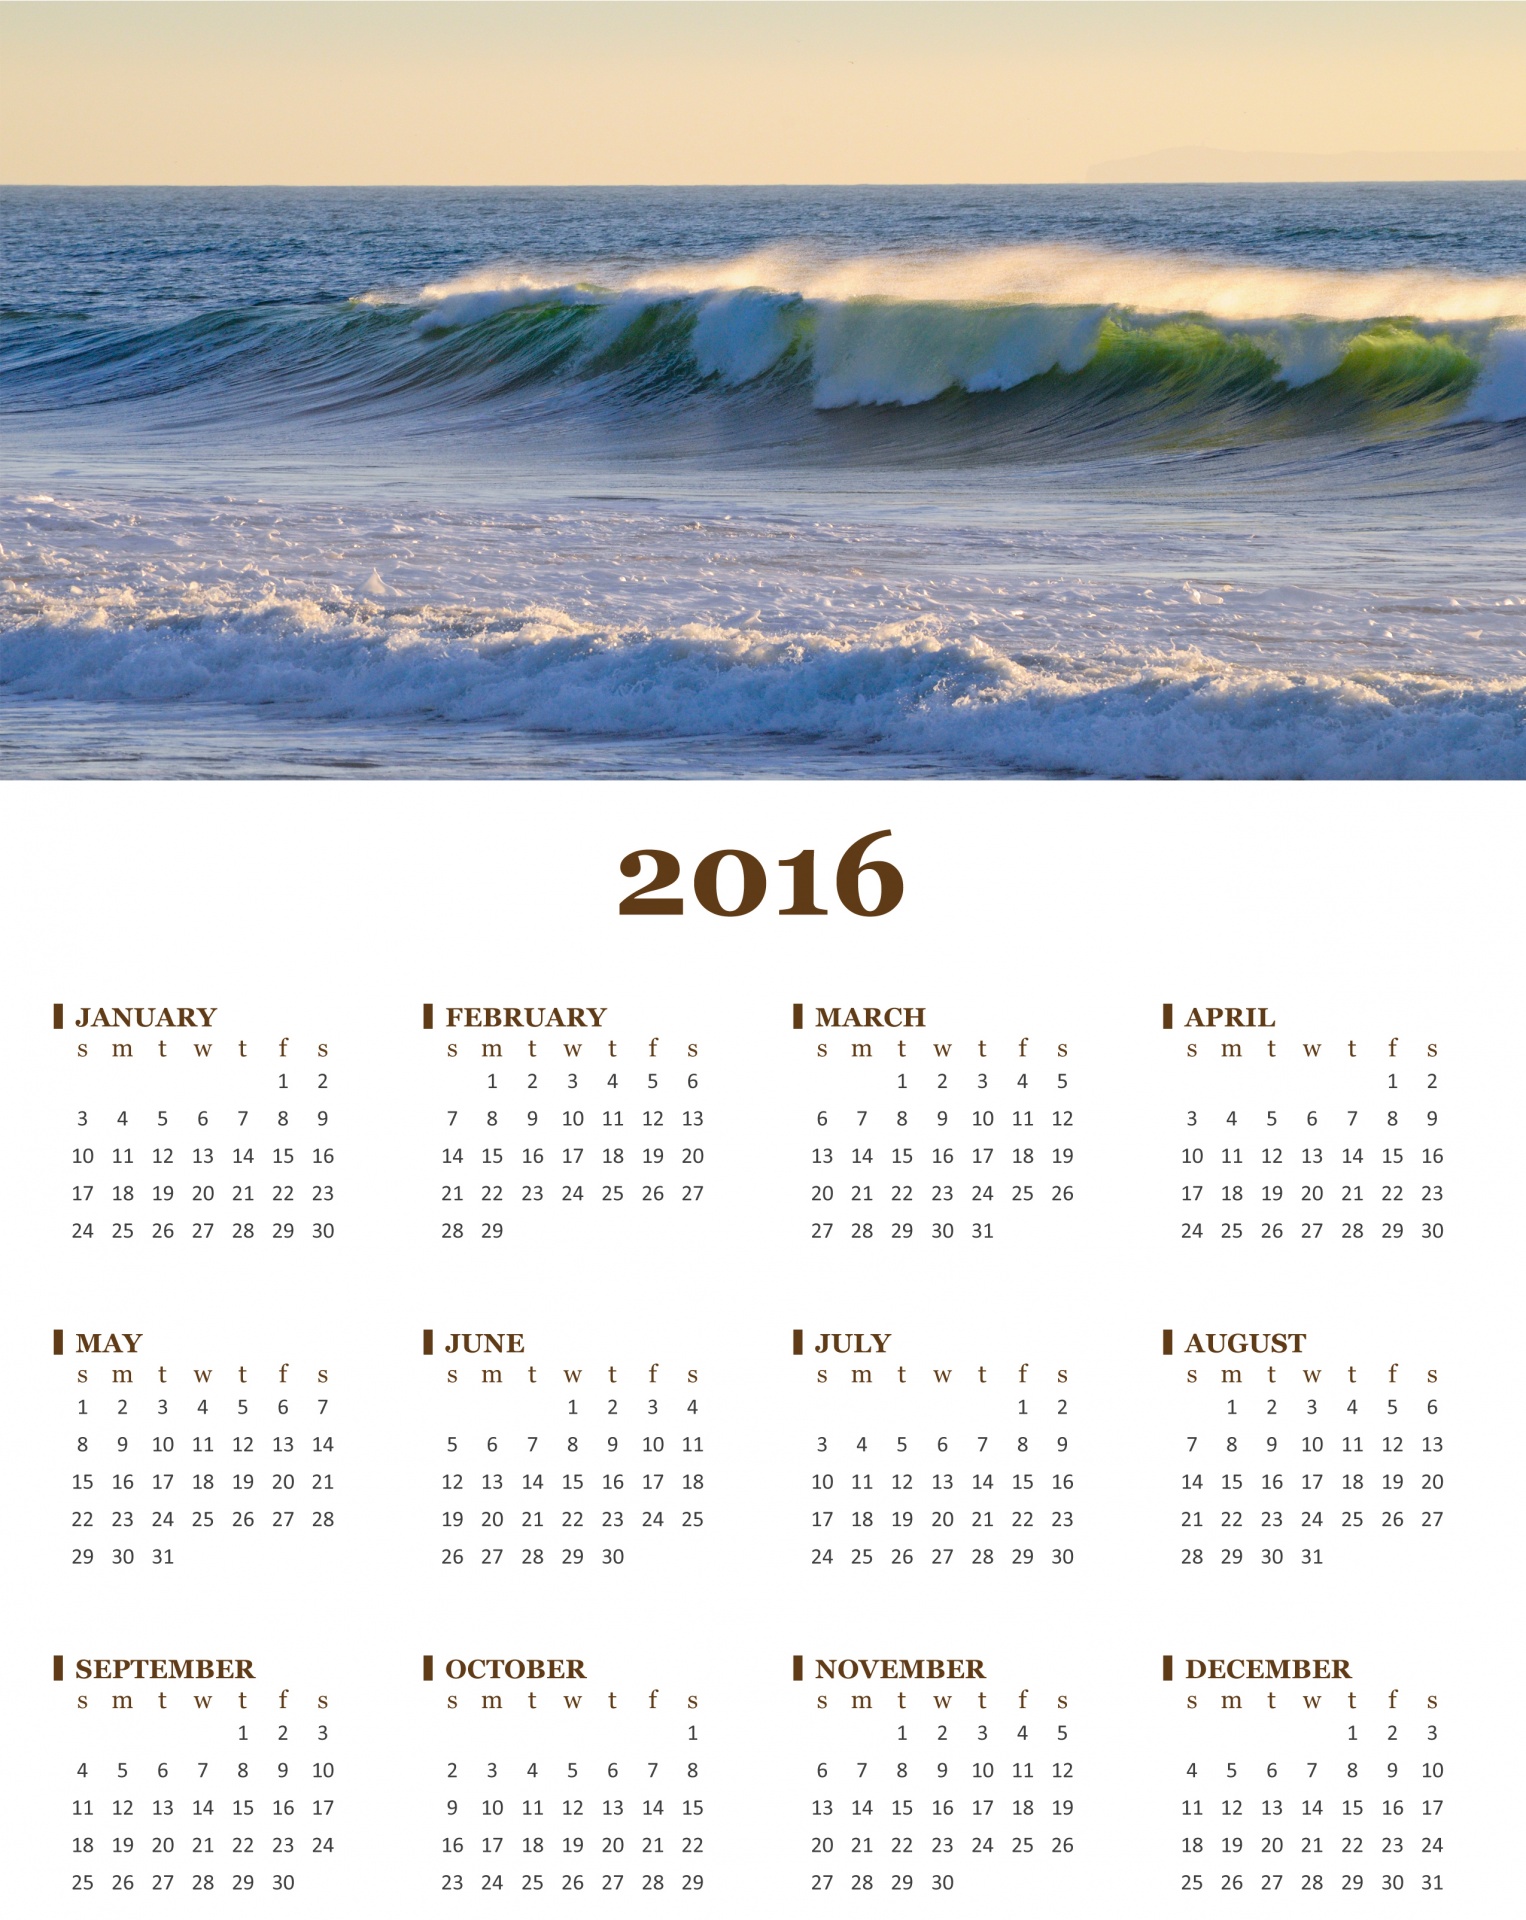 Annual 2016 Calendar Of Ocean Wave